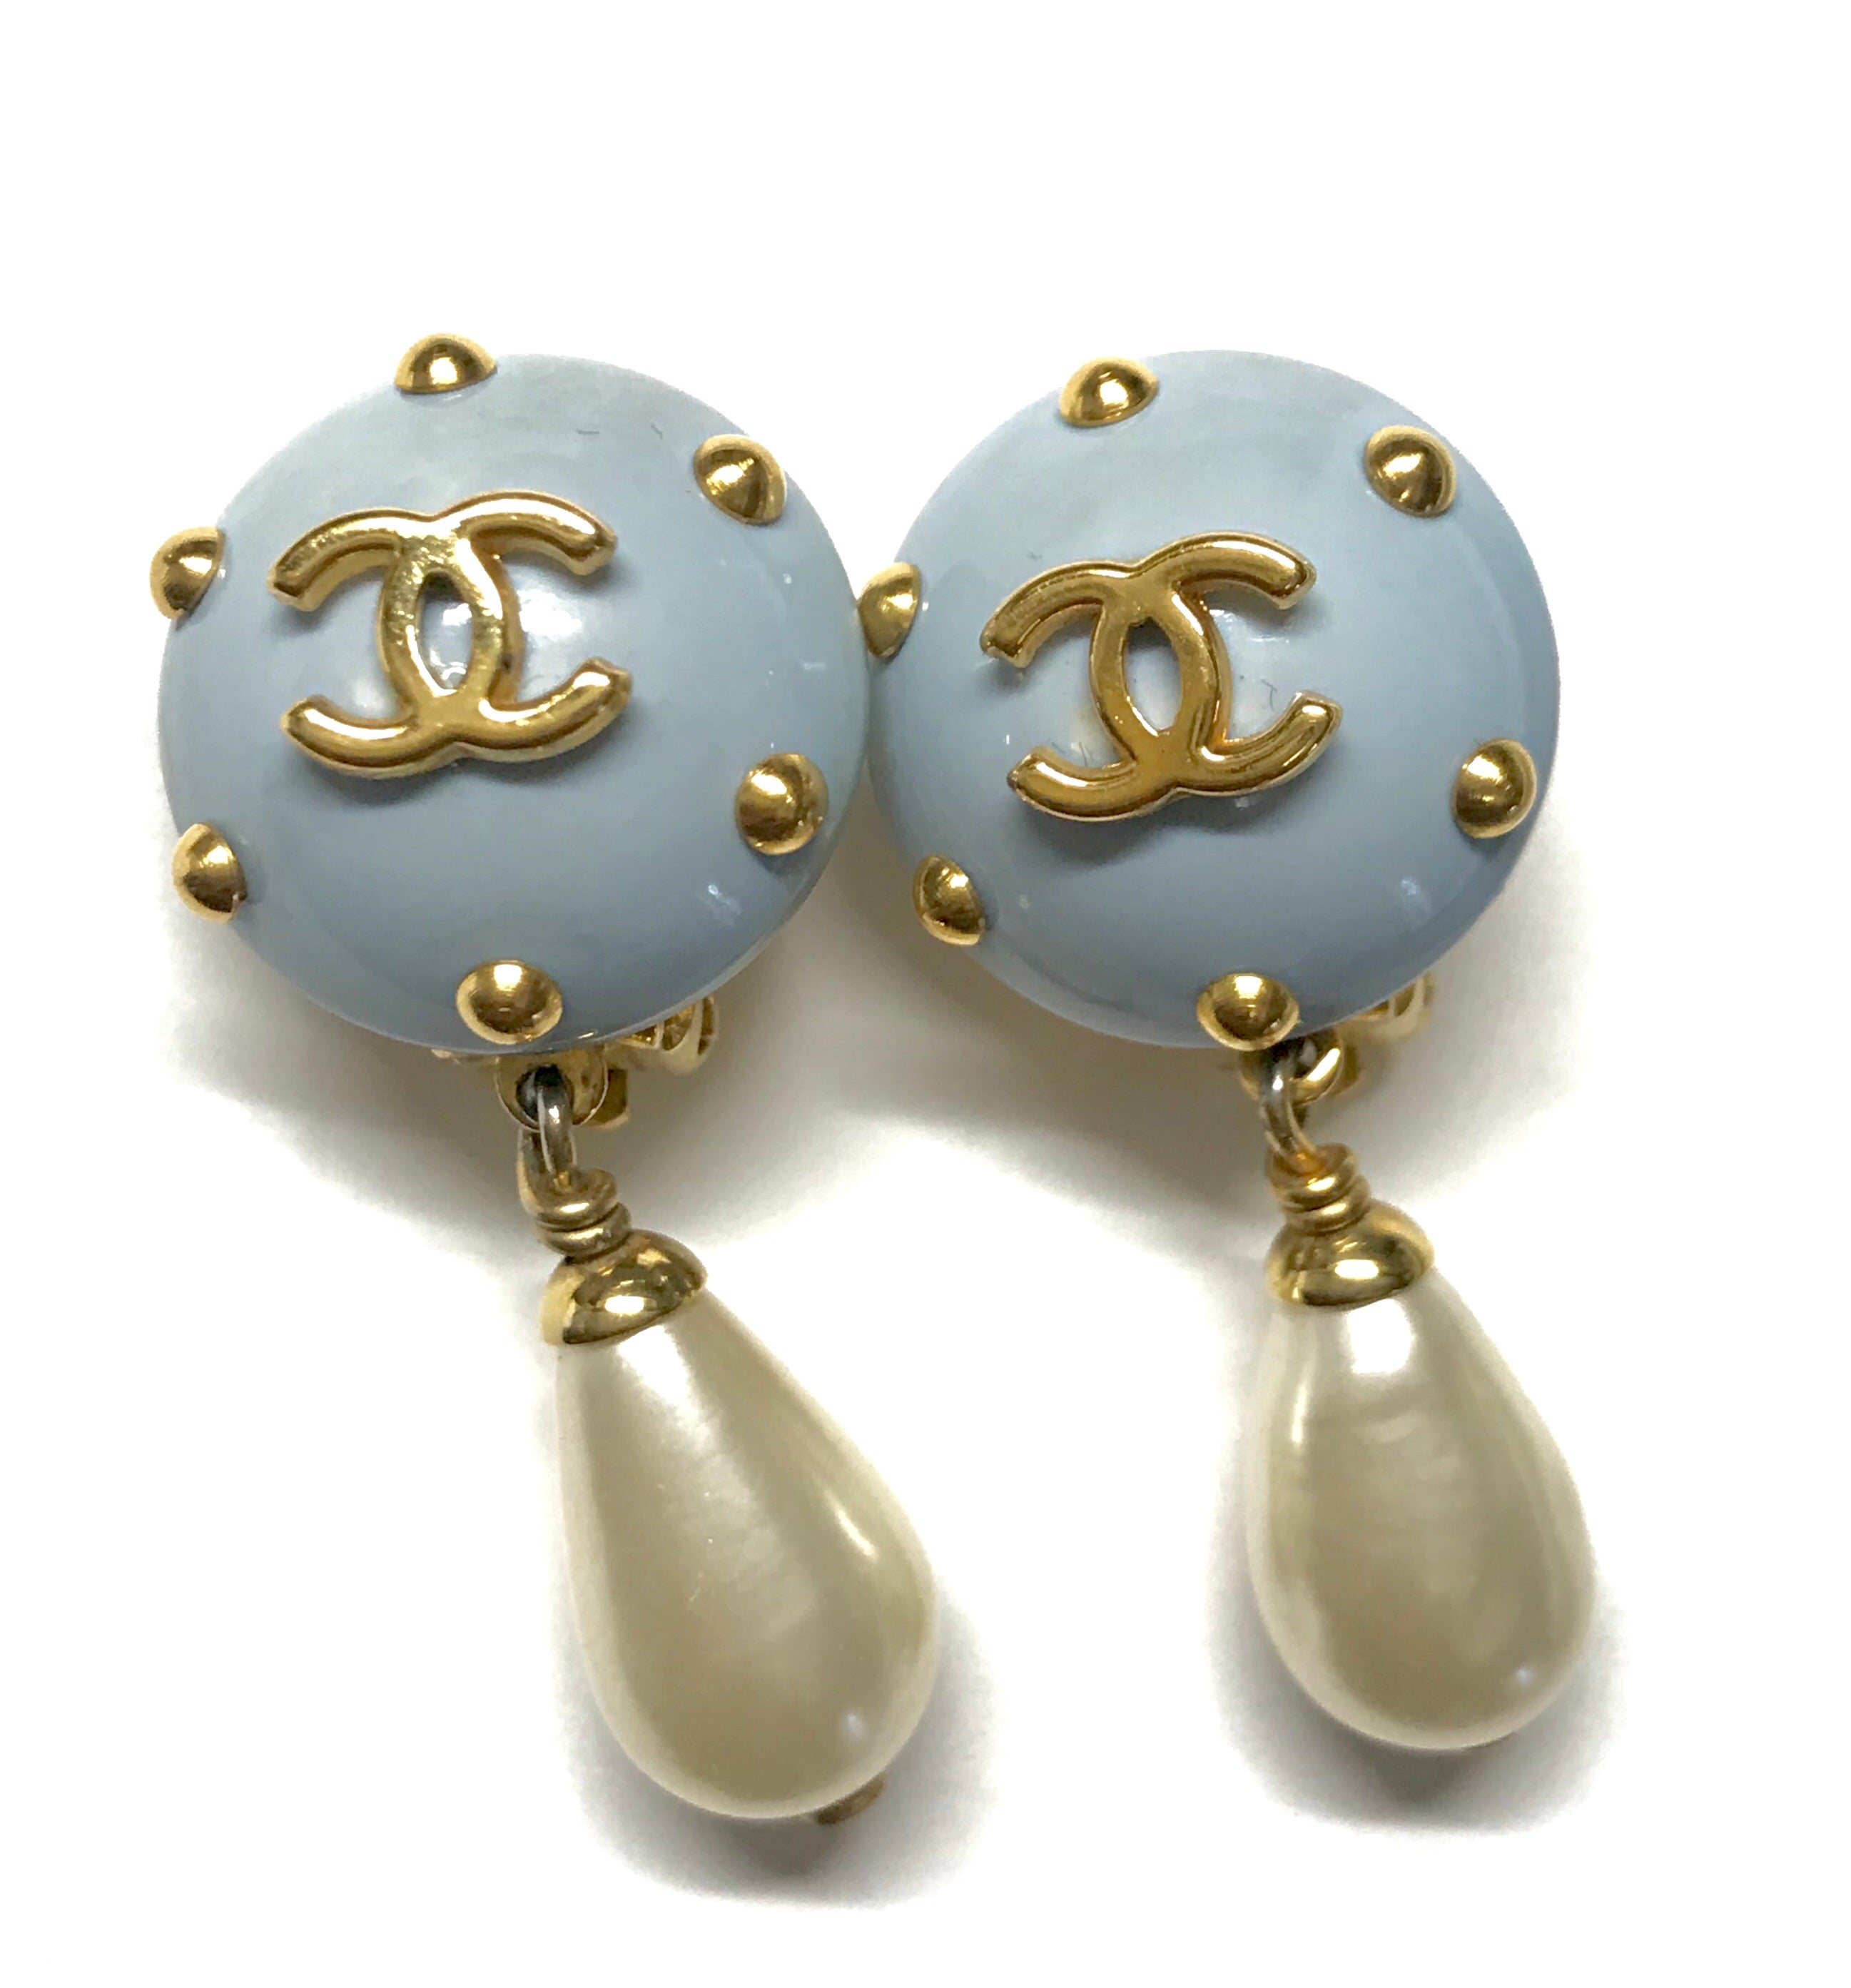 CHANEL Pearl CC Earrings Gold  Pearl earrings vintage, White gold